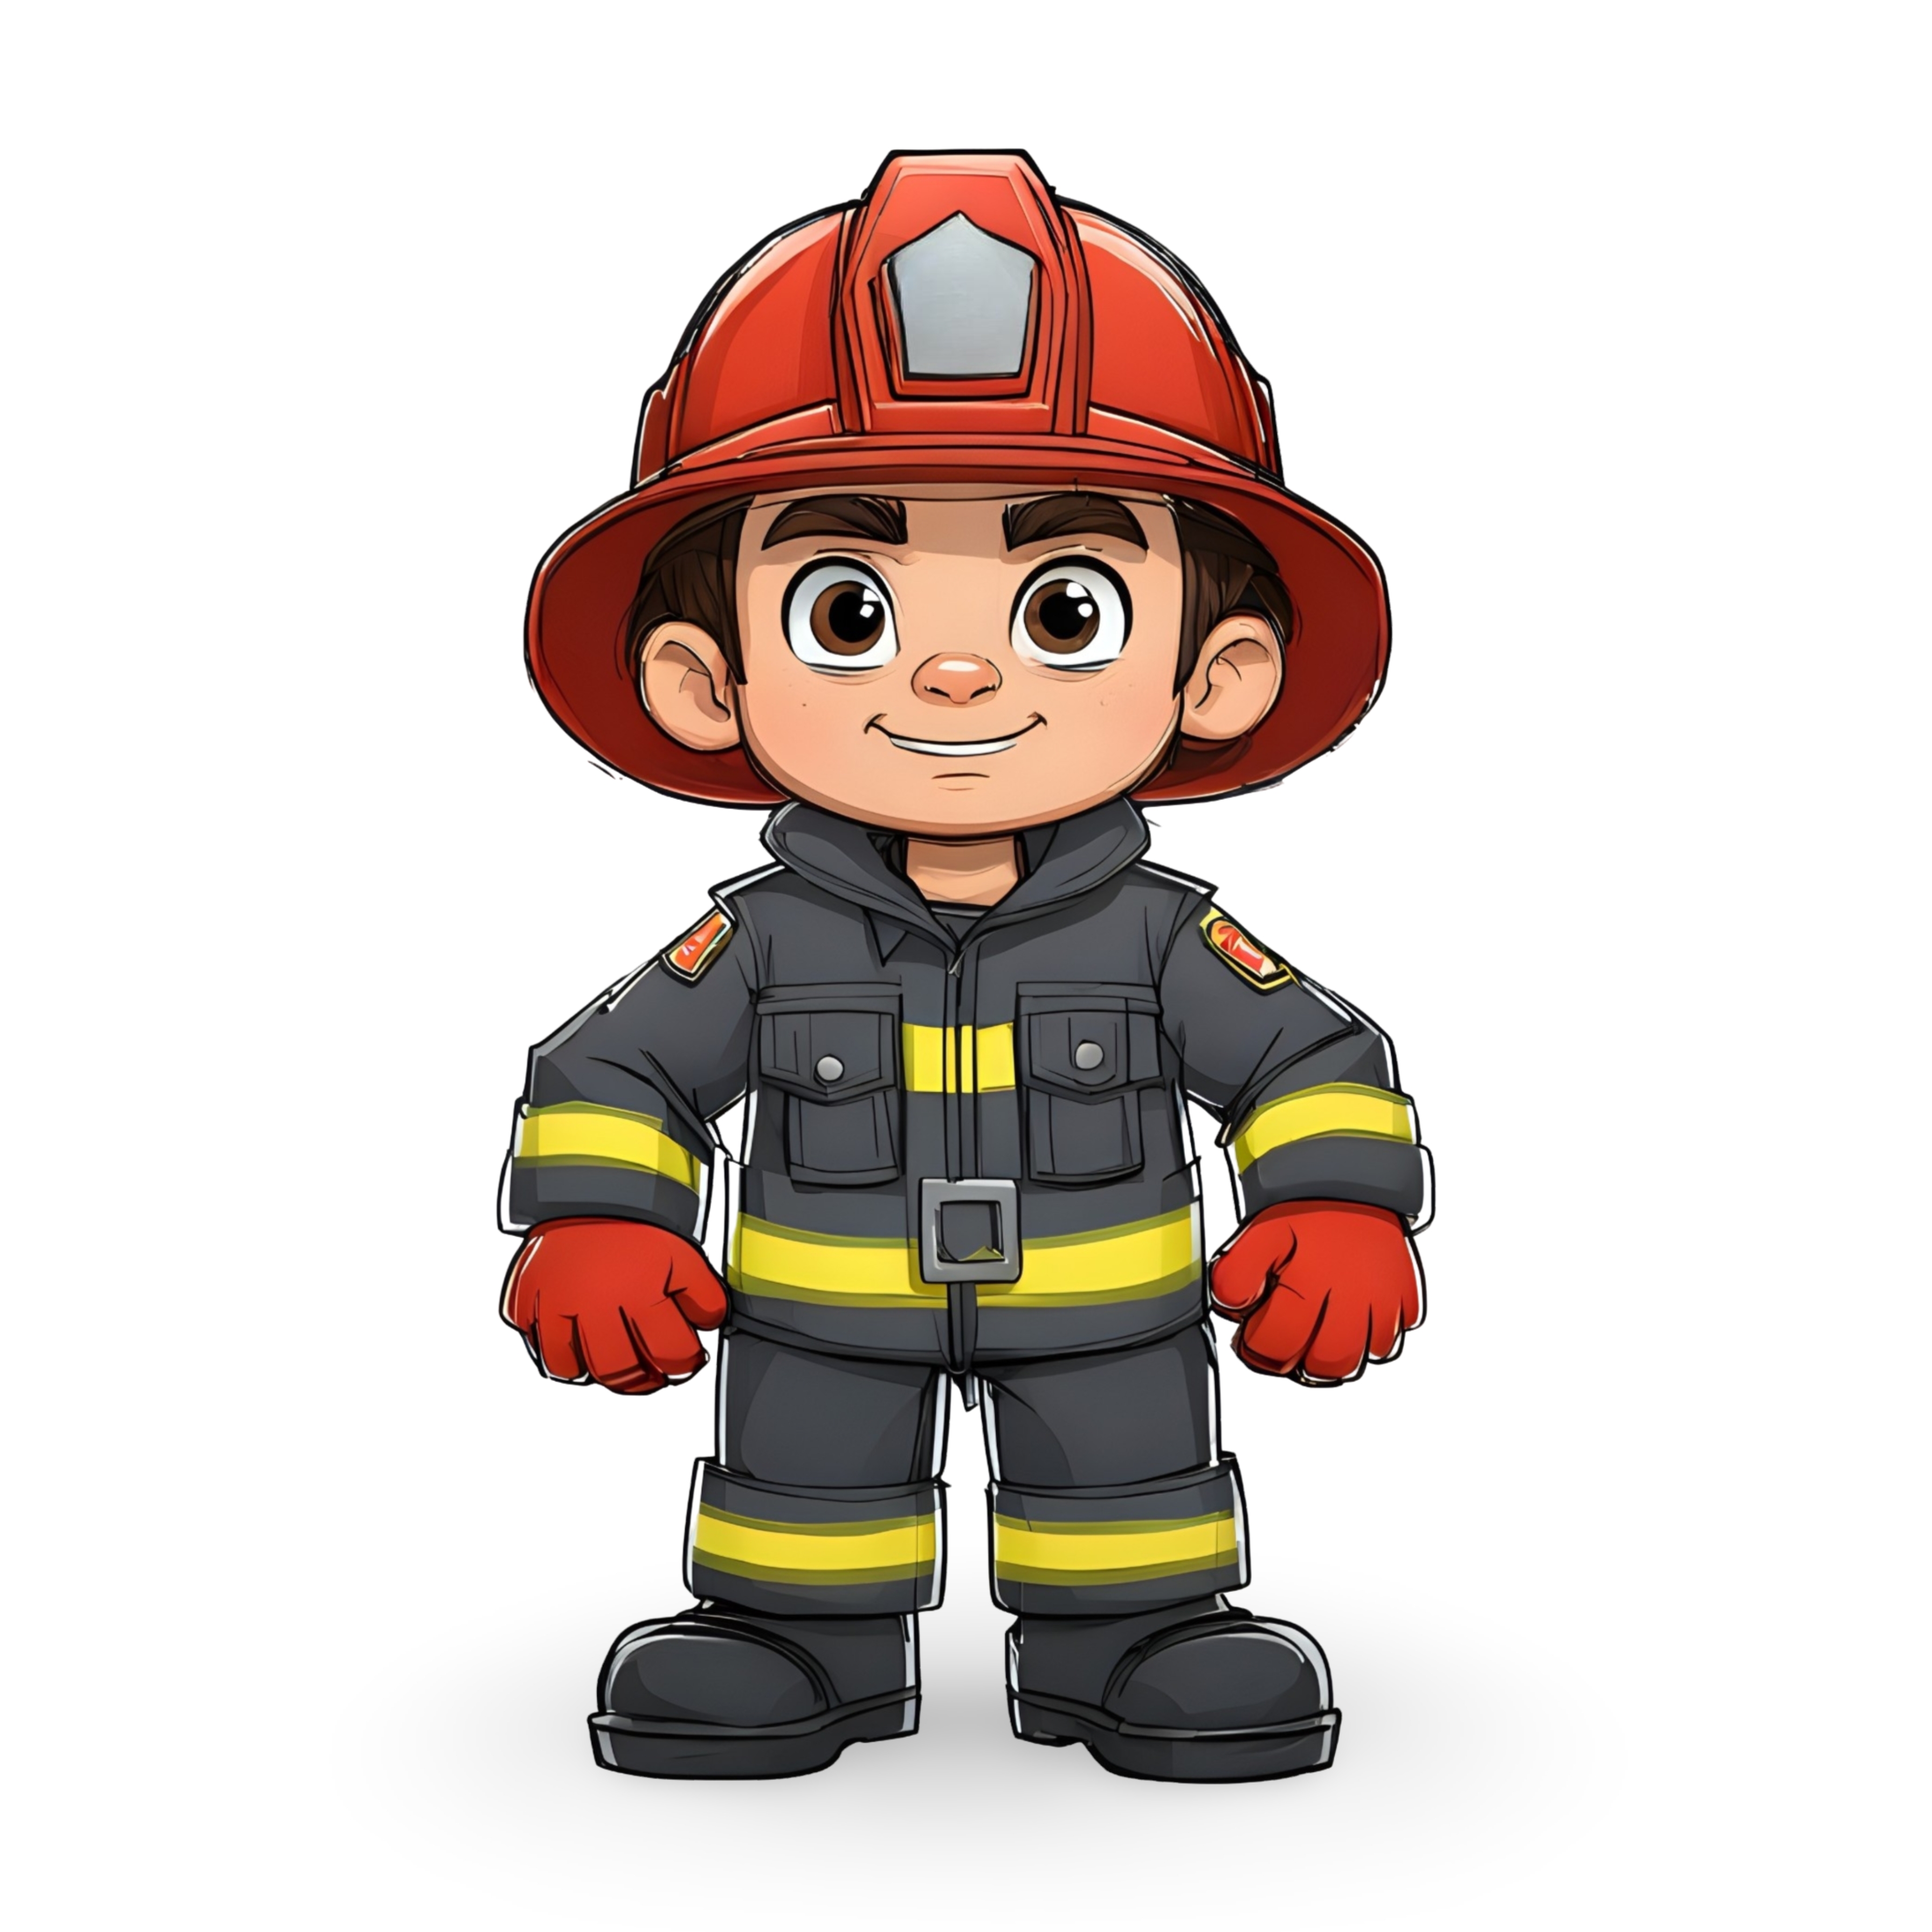 Fireman cartoon character